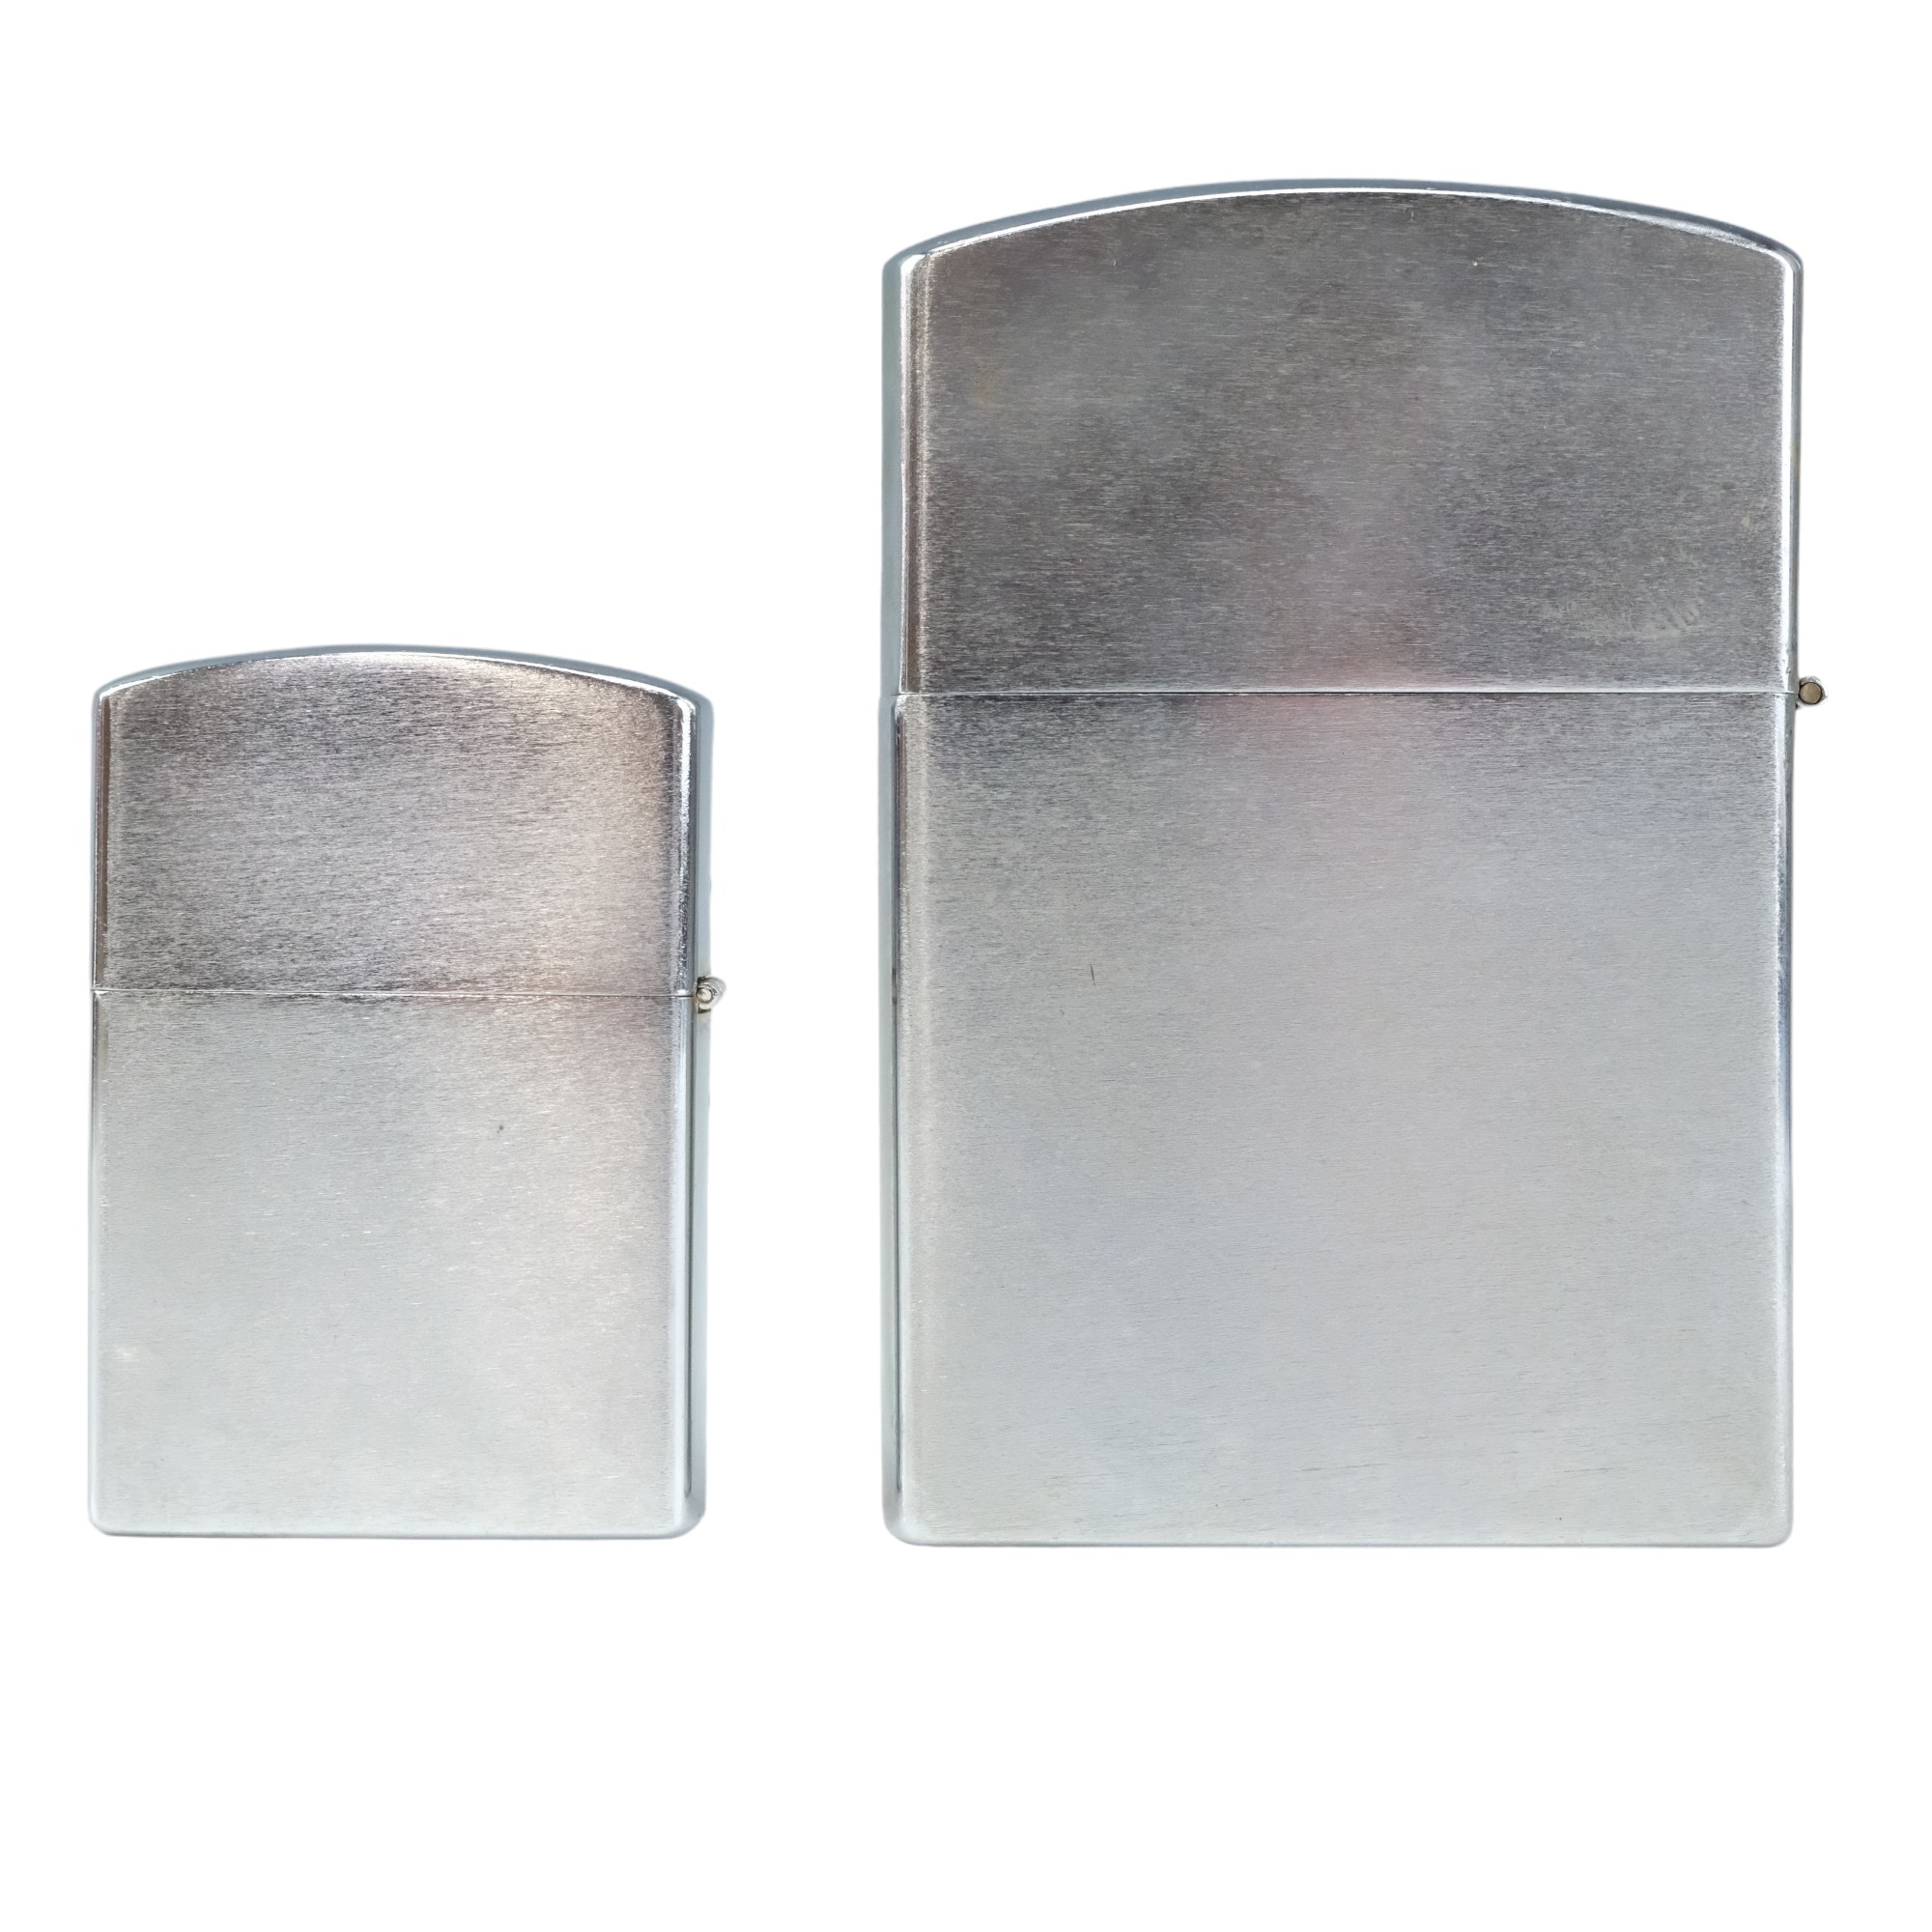 Two IDZ flip-top table petrol cigarette lighters, tallest 17 cm - Image 3 of 3